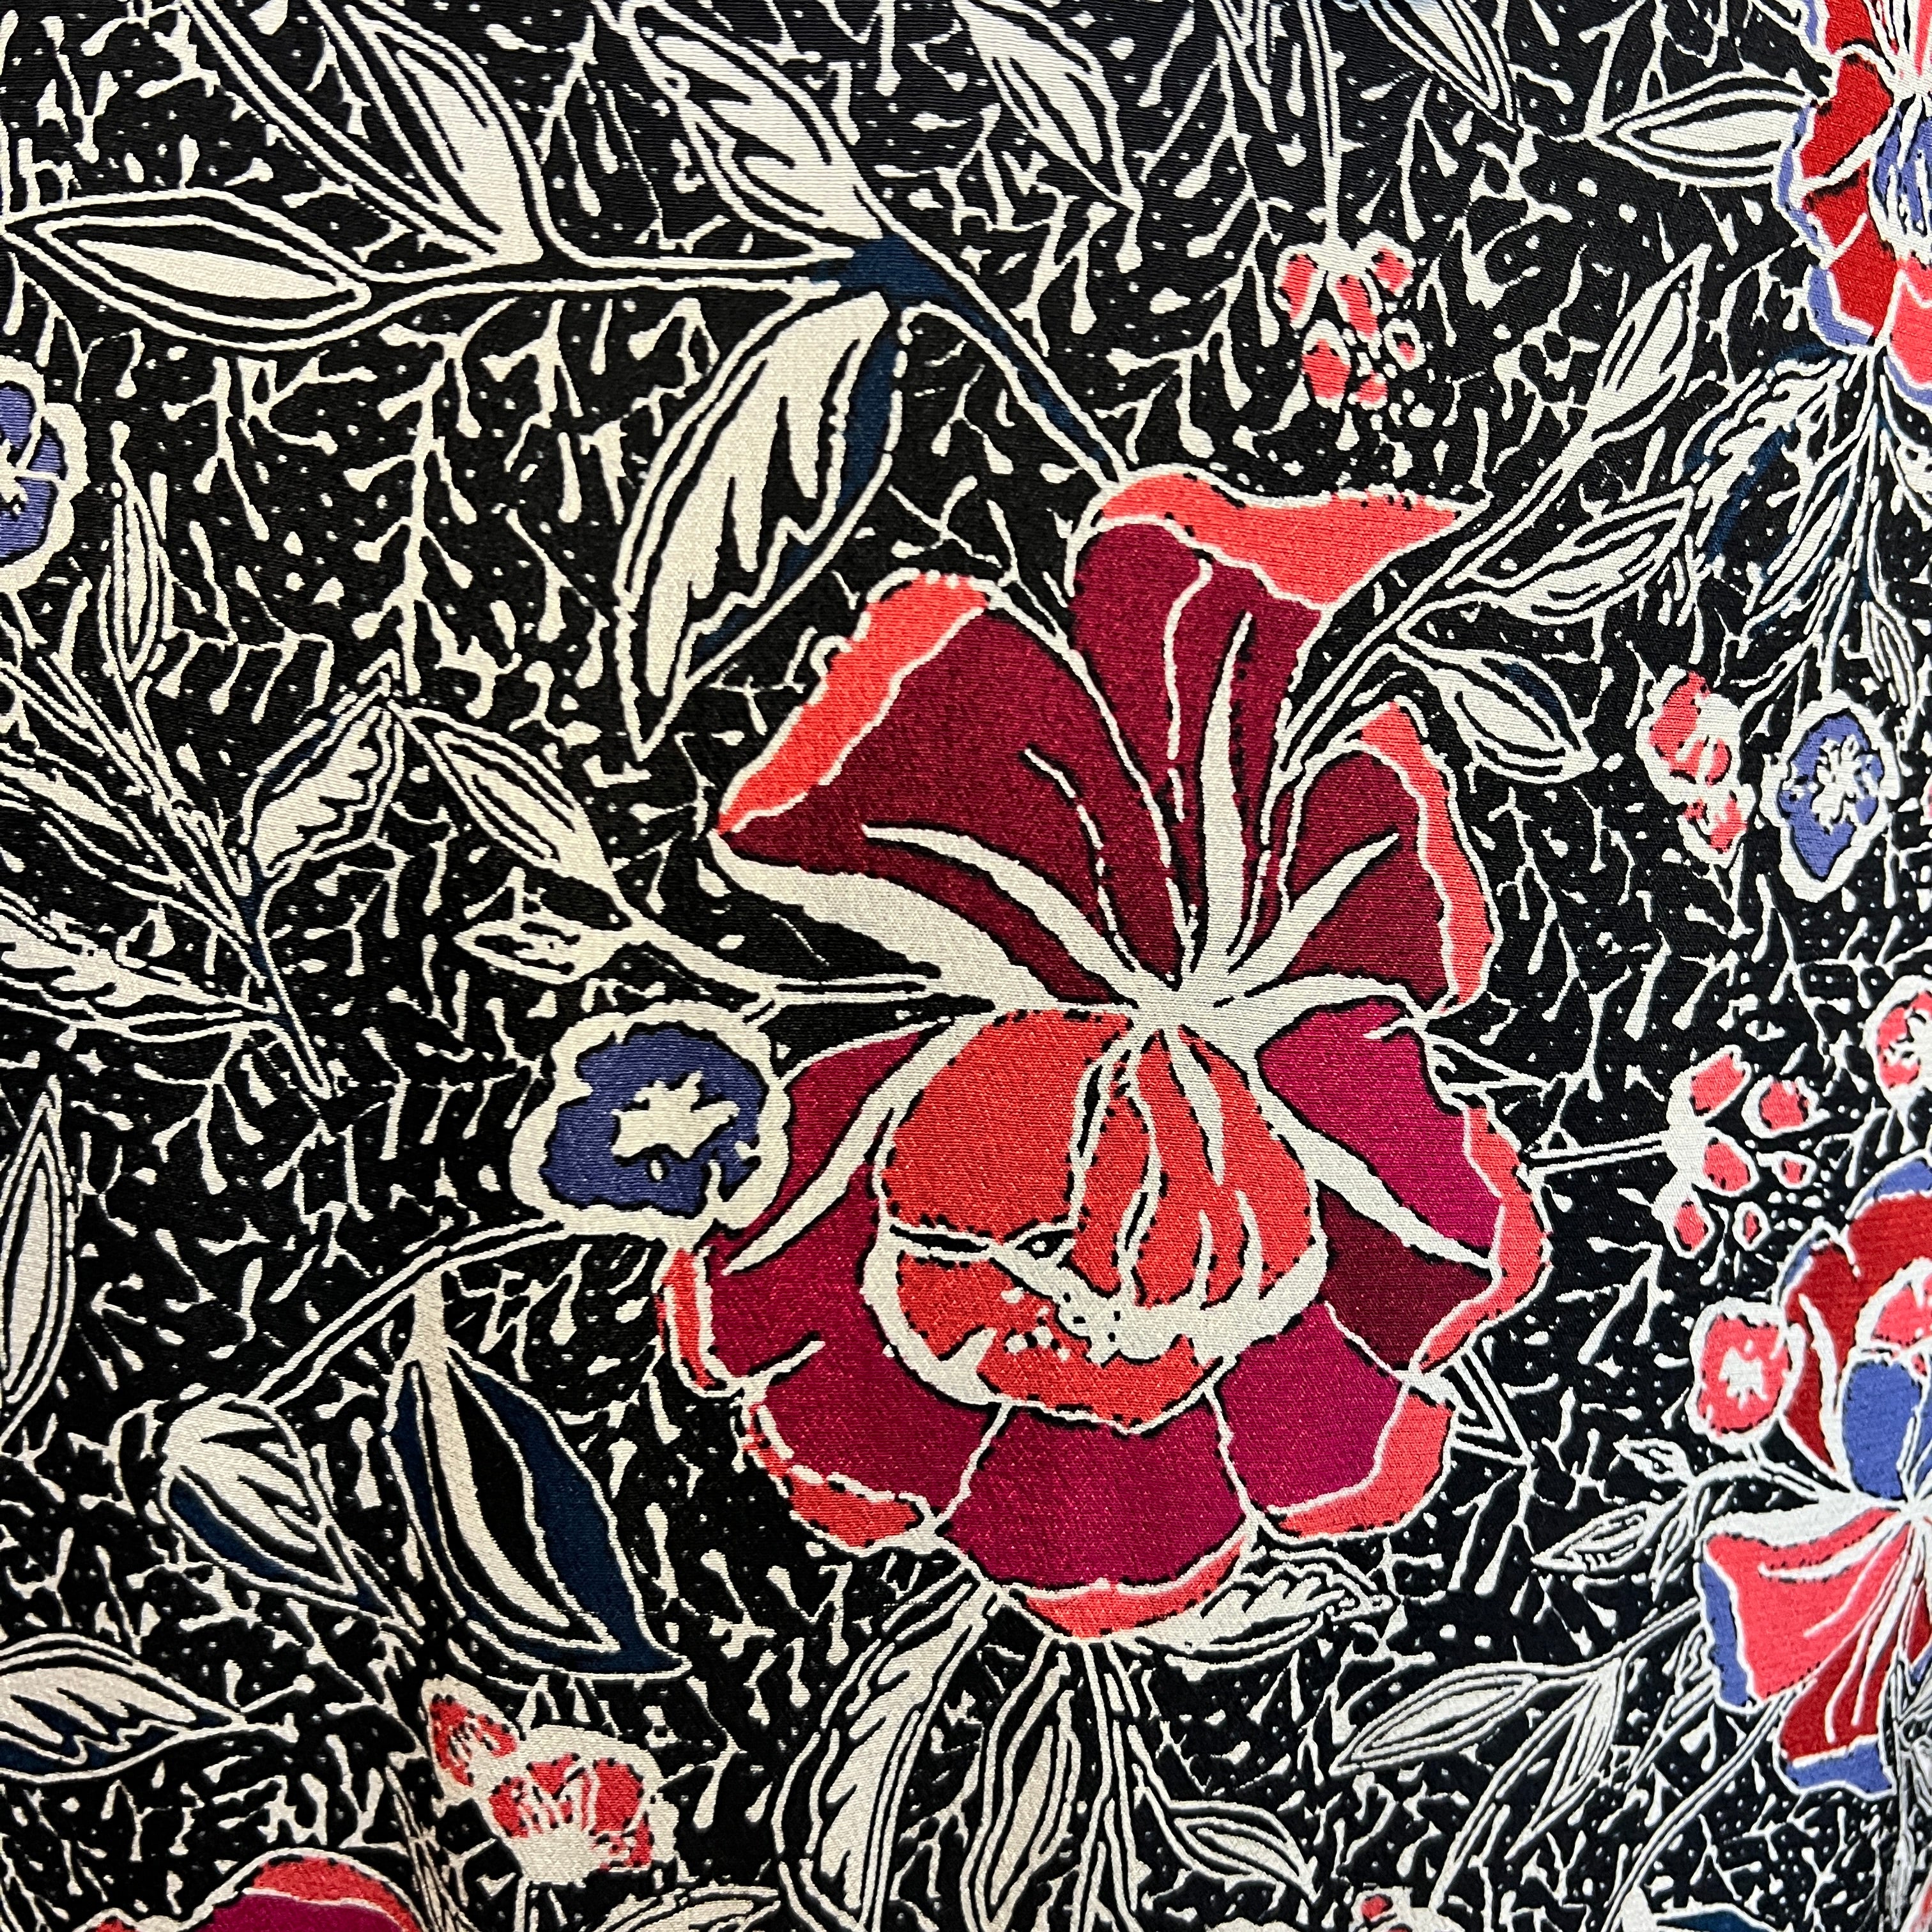 ISABEL MARANT floral silk skirt